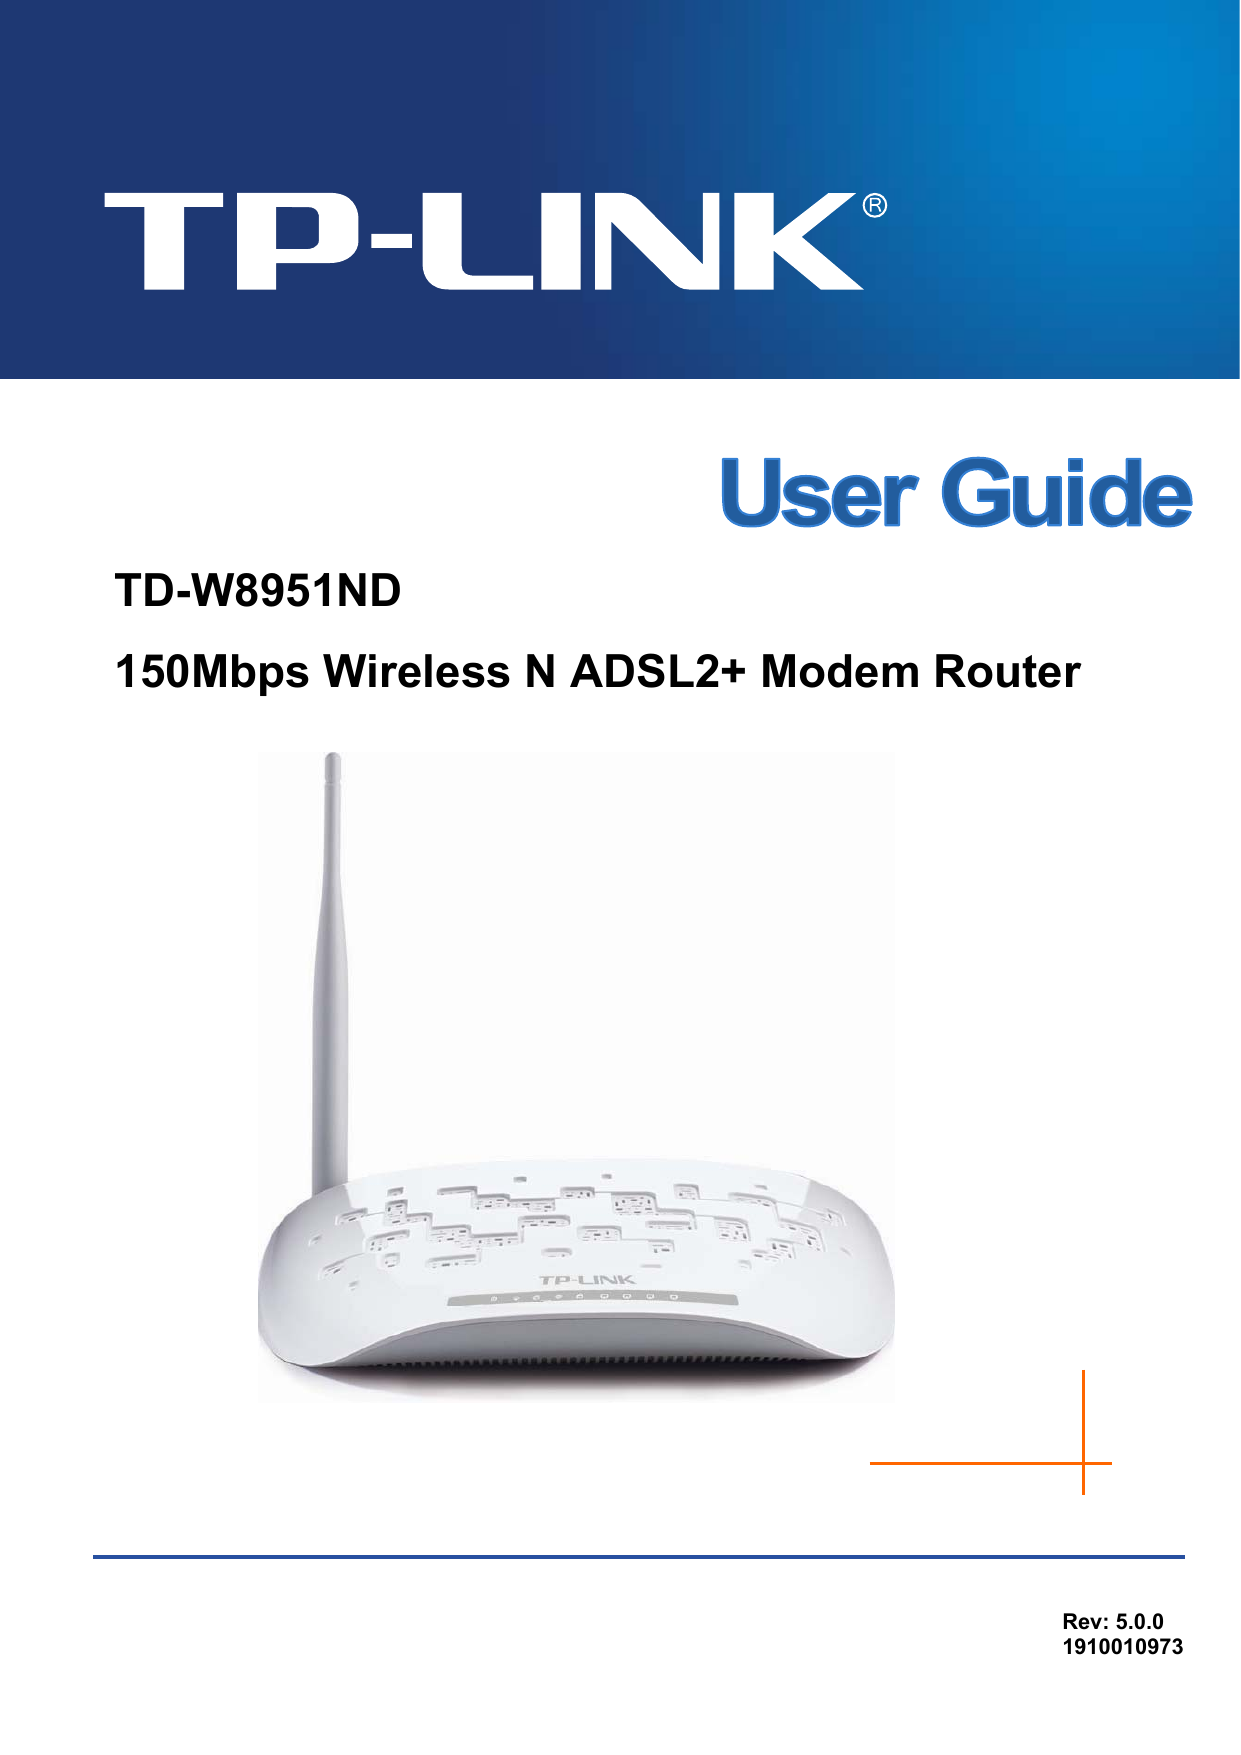   TD-W8951ND 150Mbps Wireless N ADSL2+ Modem Router   Rev: 5.0.0 1910010973 